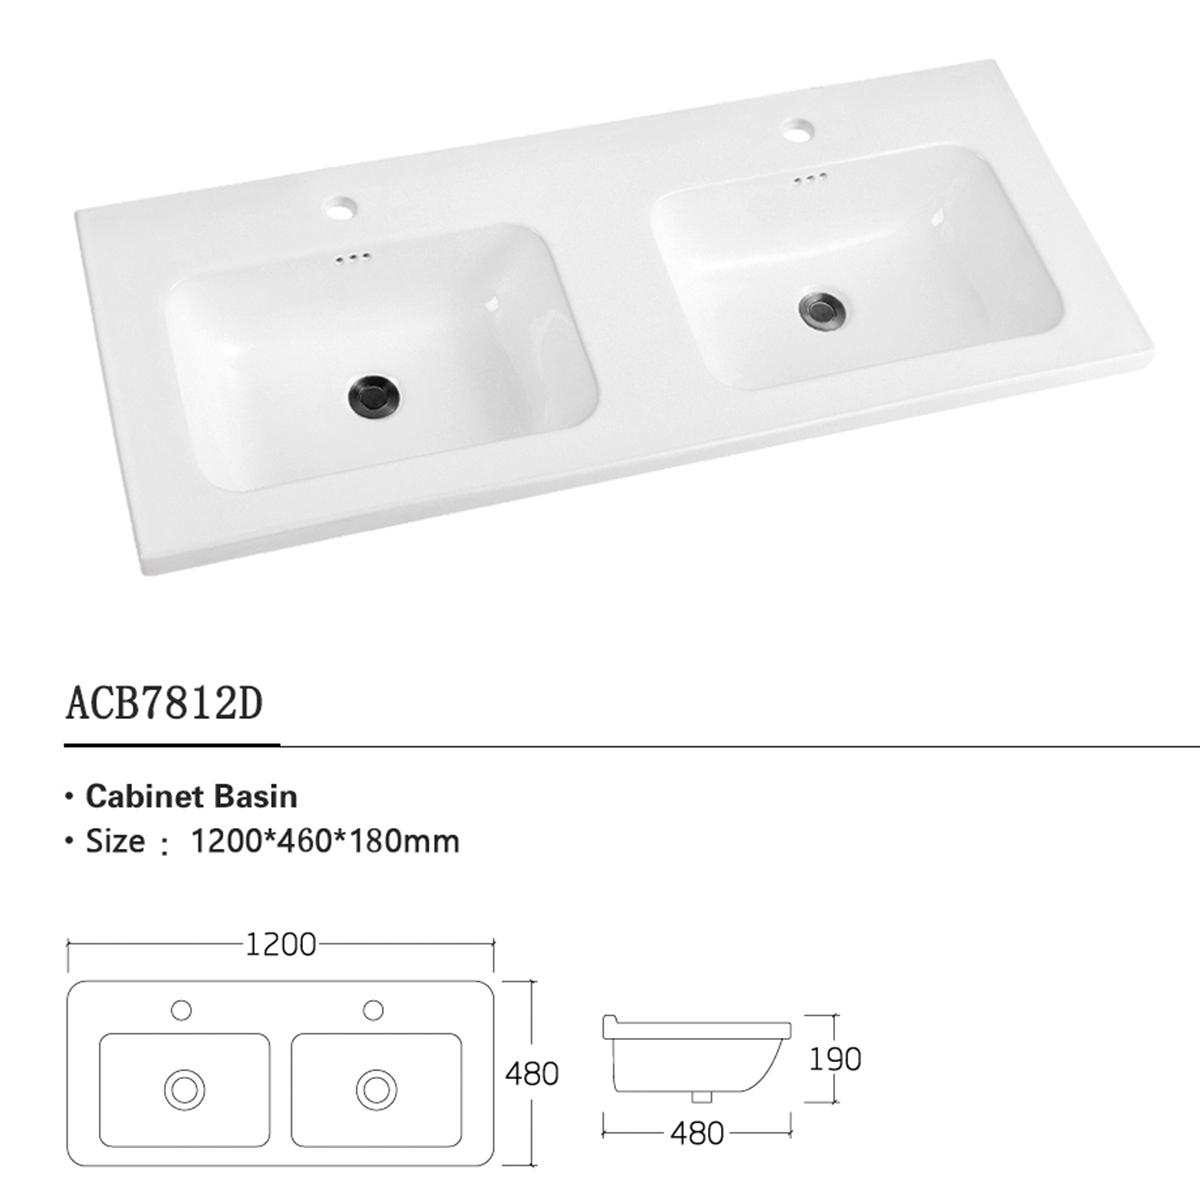 Aquacubic Drop-in zelf-omrandende rechthoekige badkamer dubbele kom ijdelheid top wastafel in wit